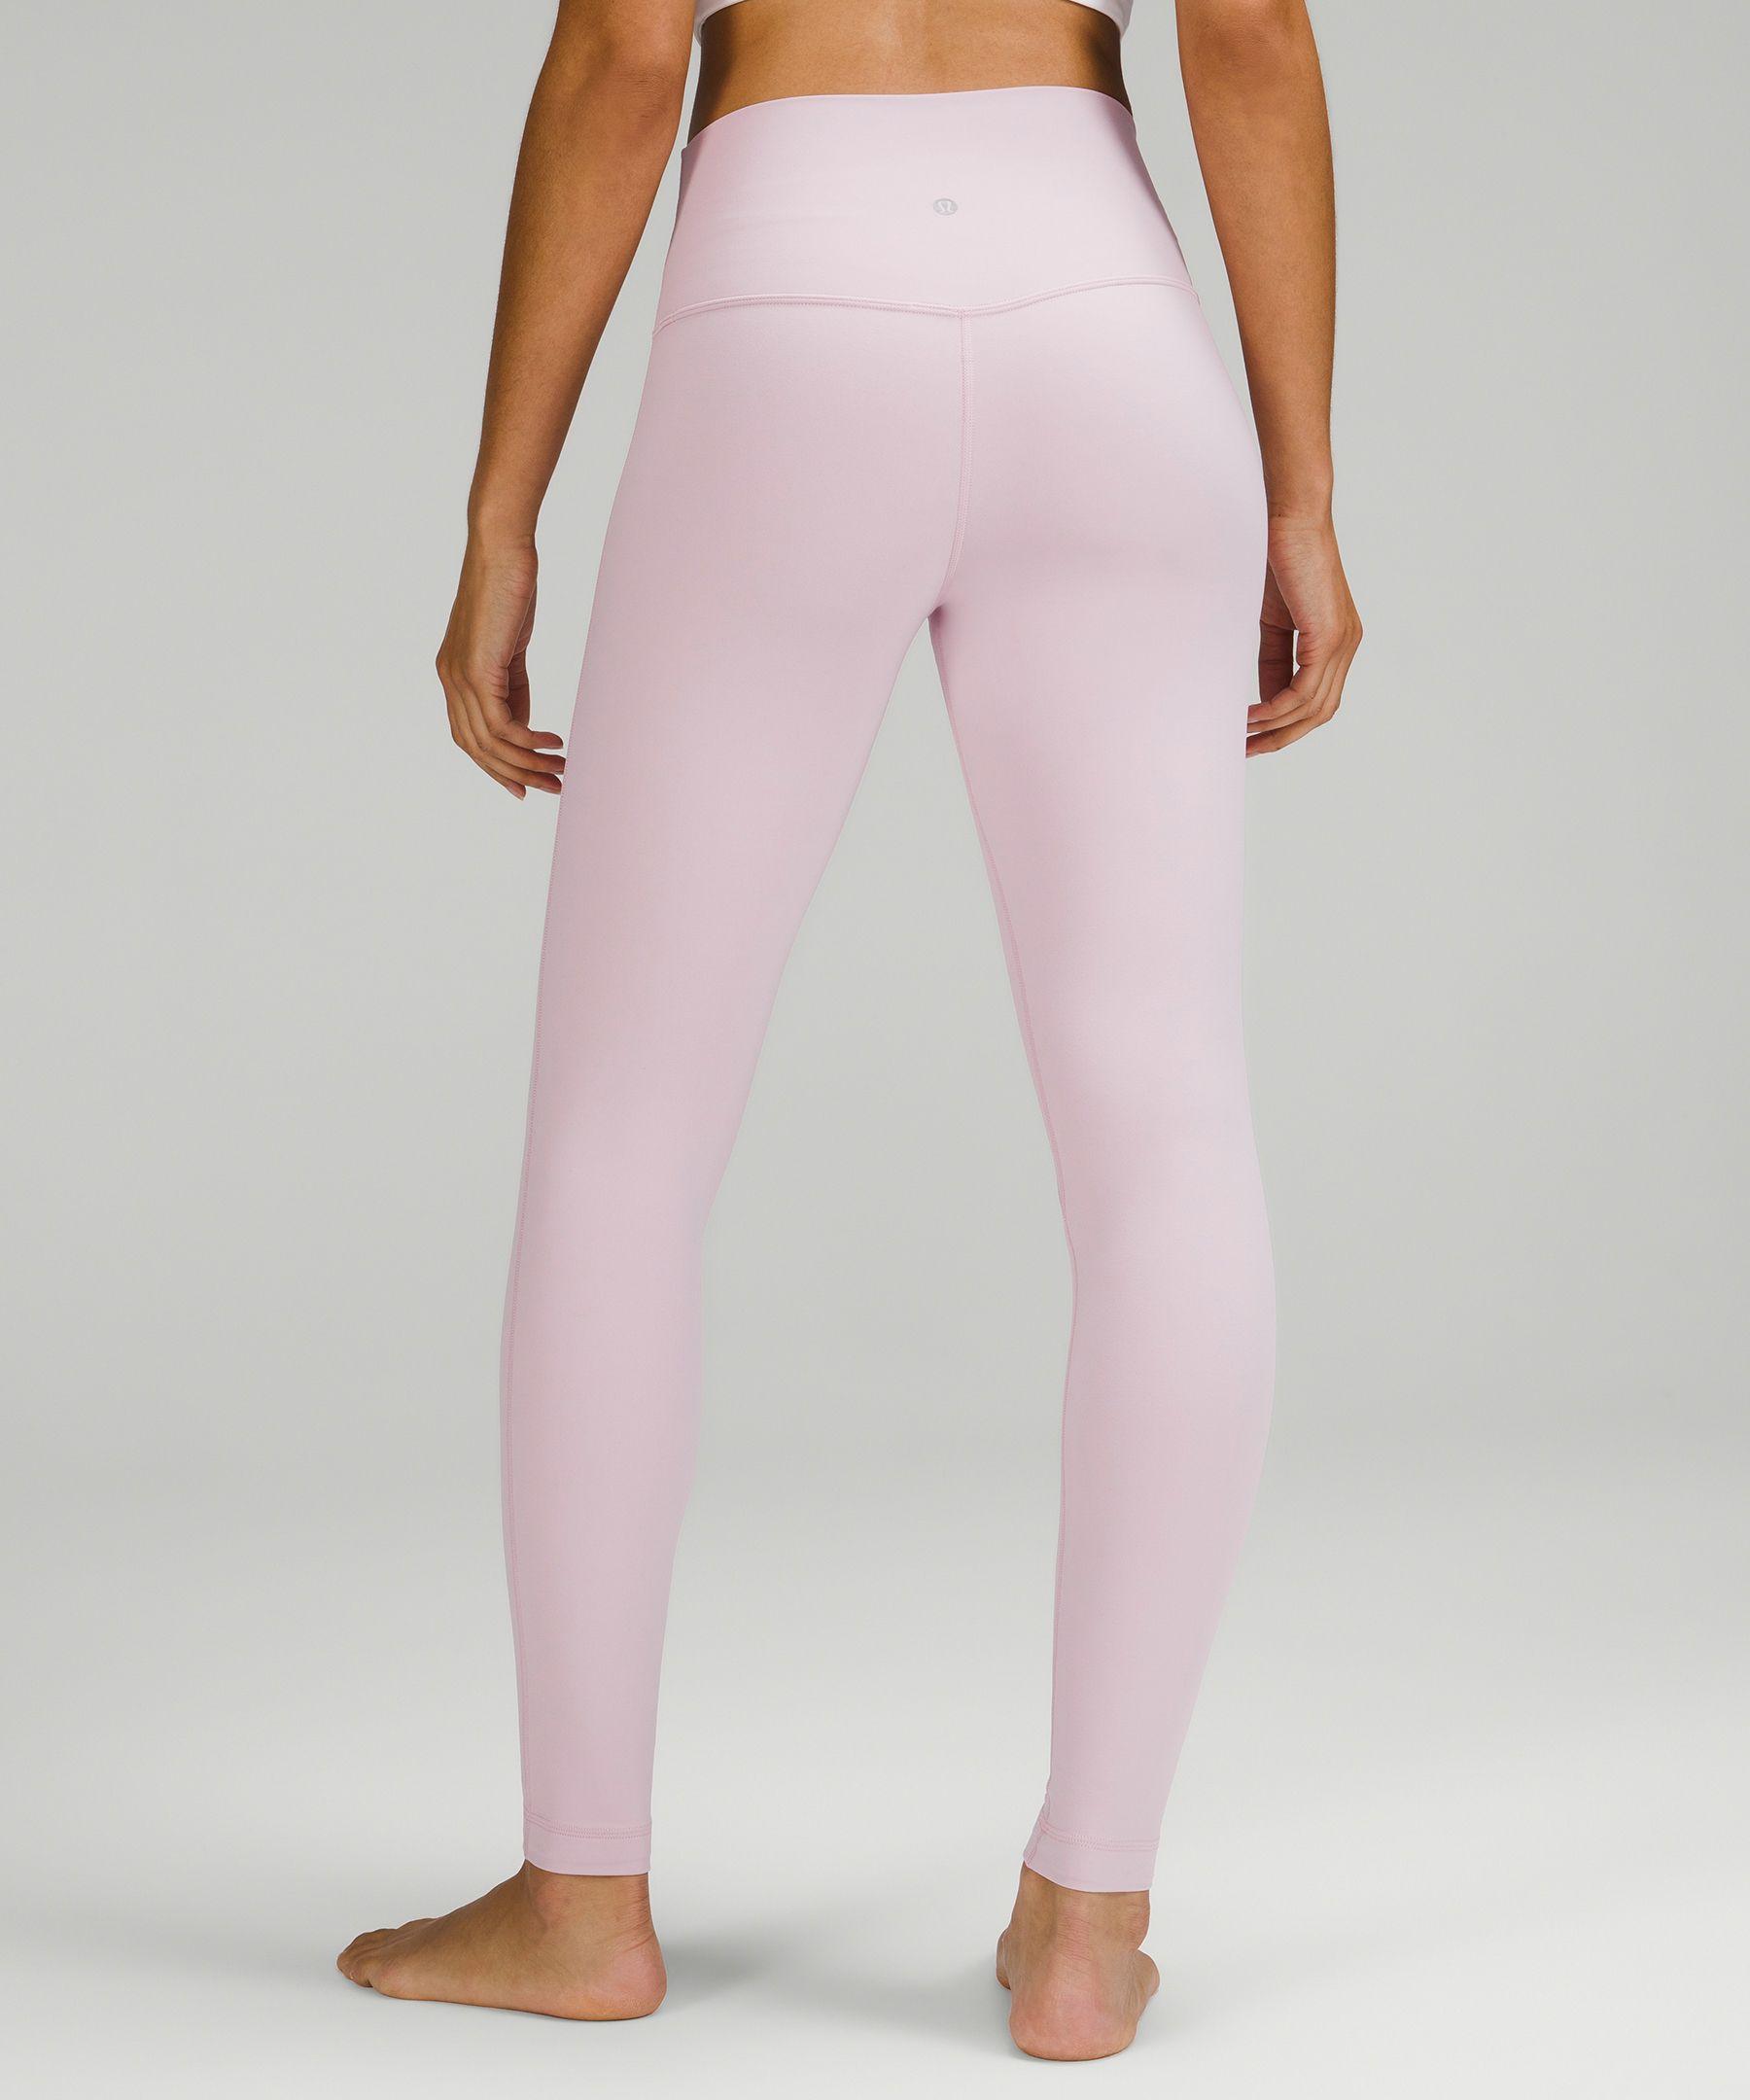 lululemon athletica Align High-rise Pants - 28 - Color Pink